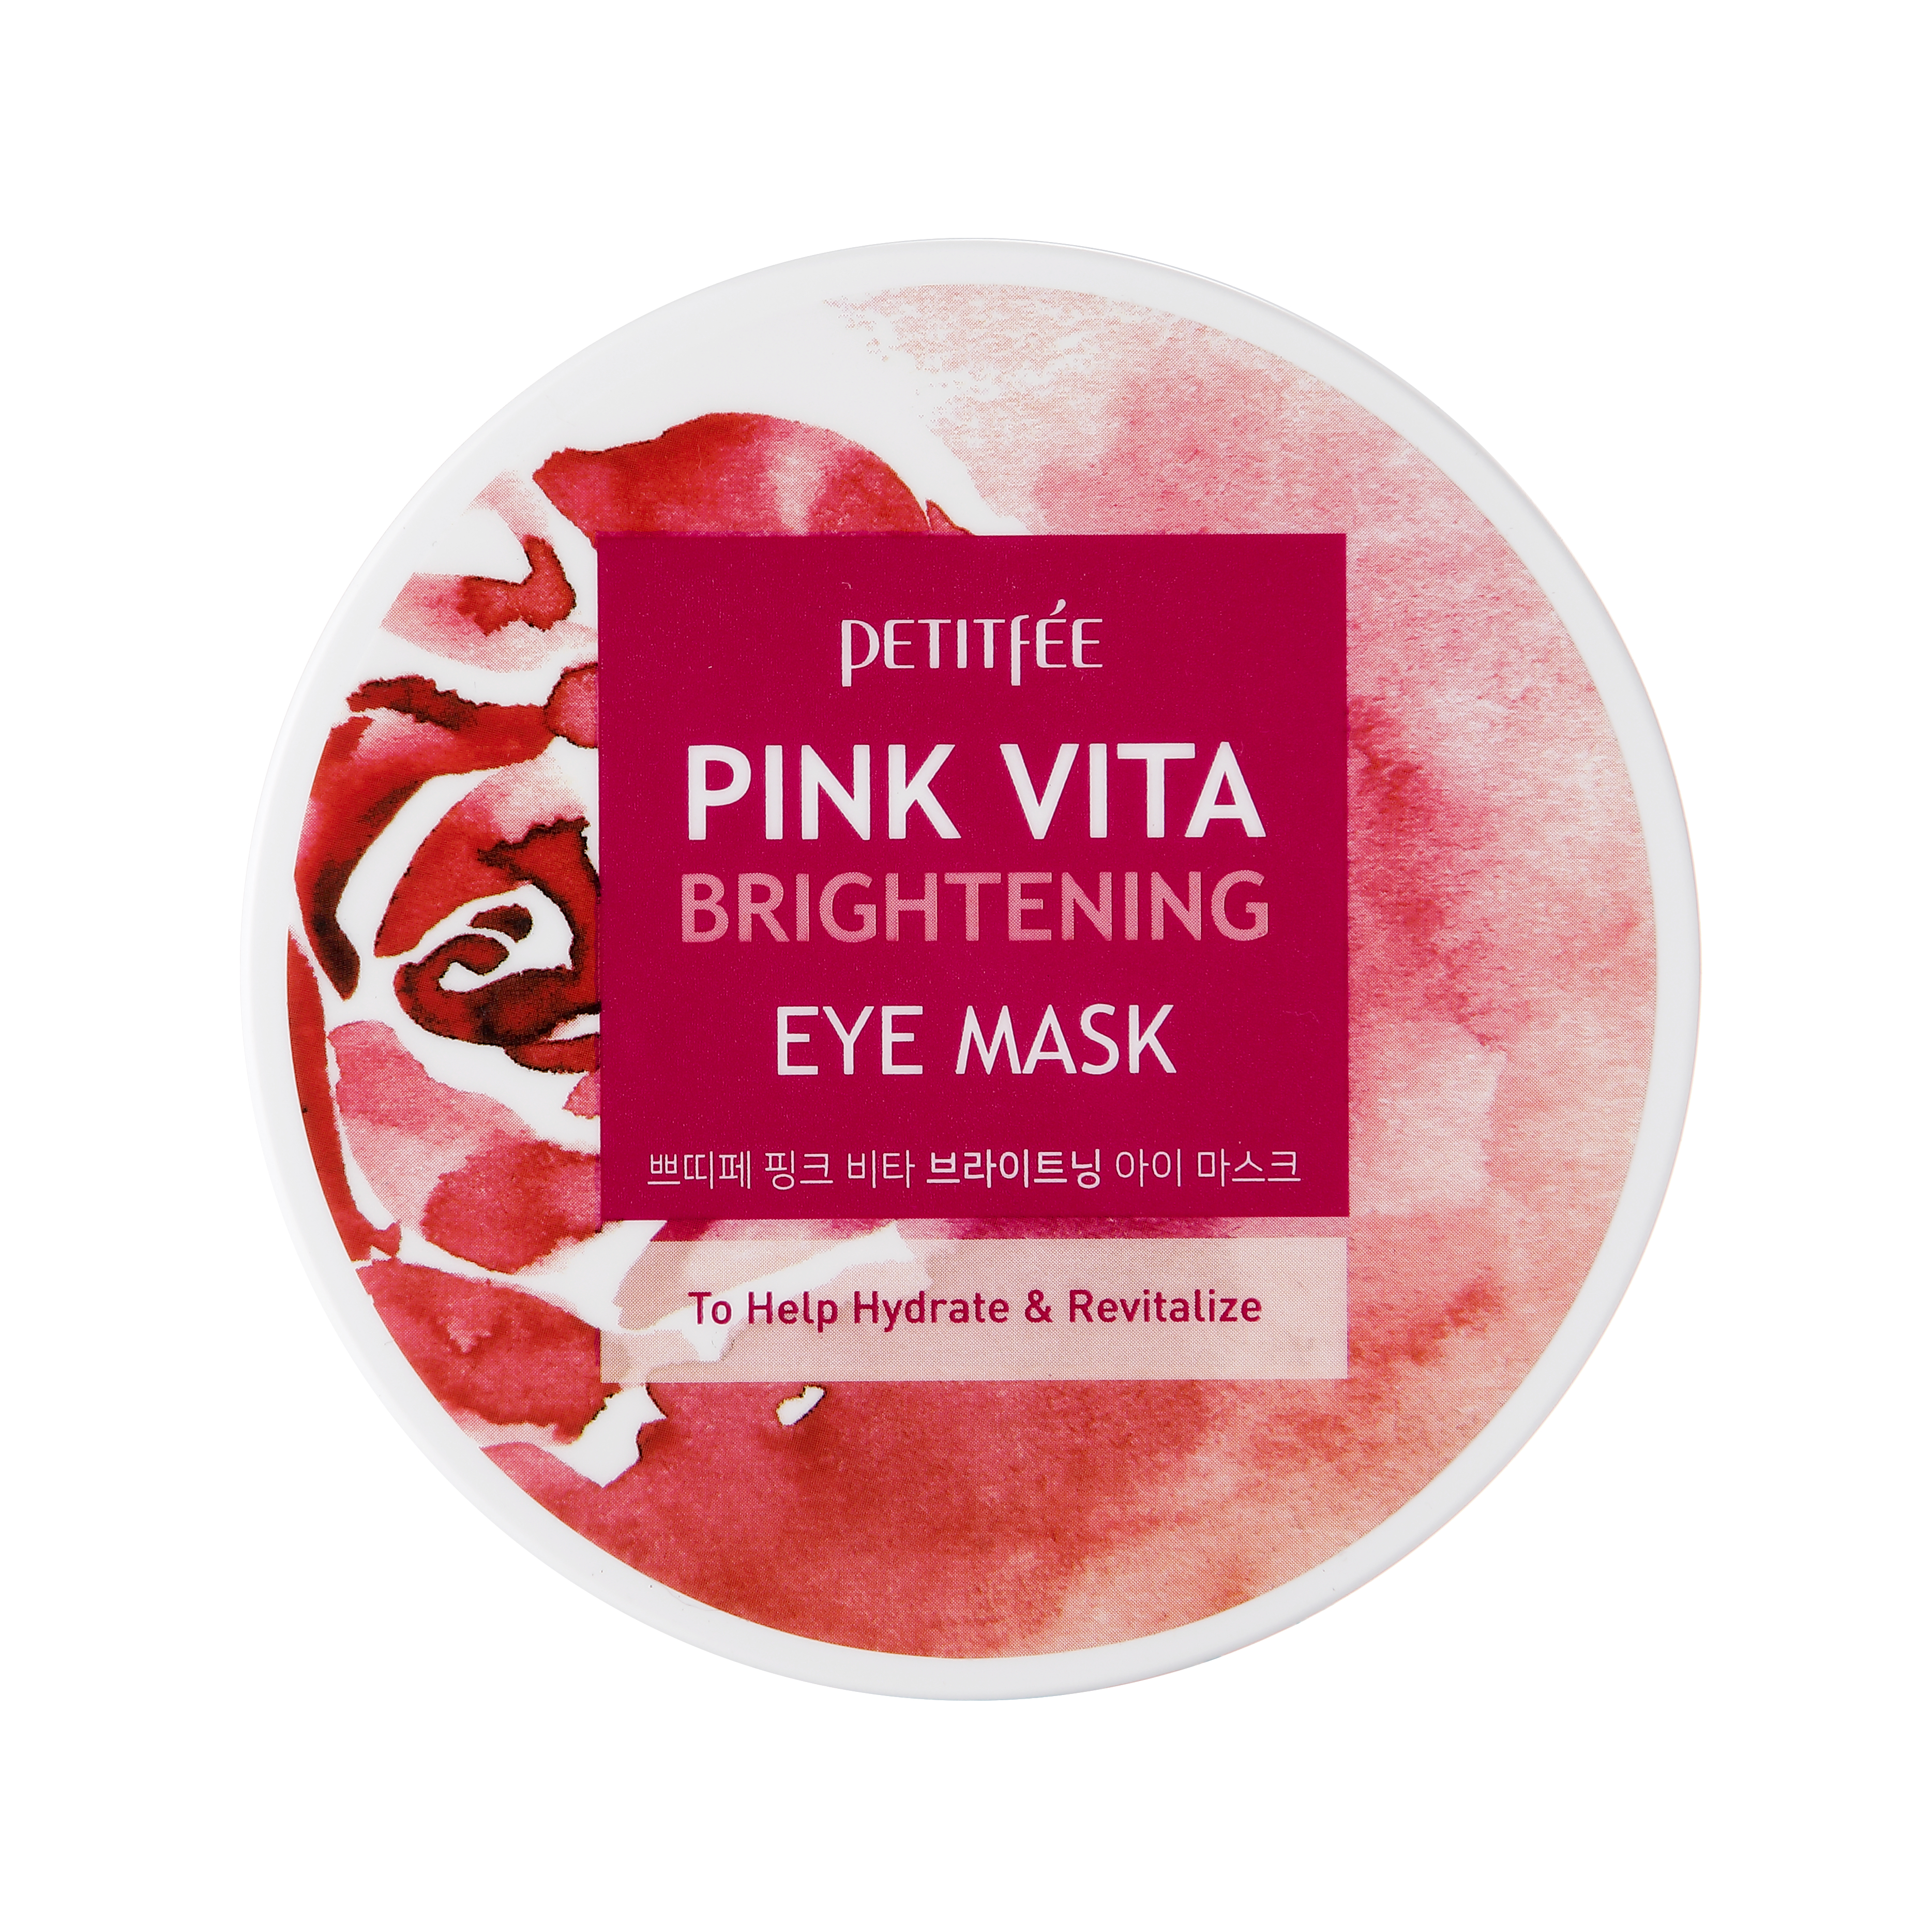 Petitfee Pink vita Brightening eye mask Осветляющие тканевые патчи для век, 60шт